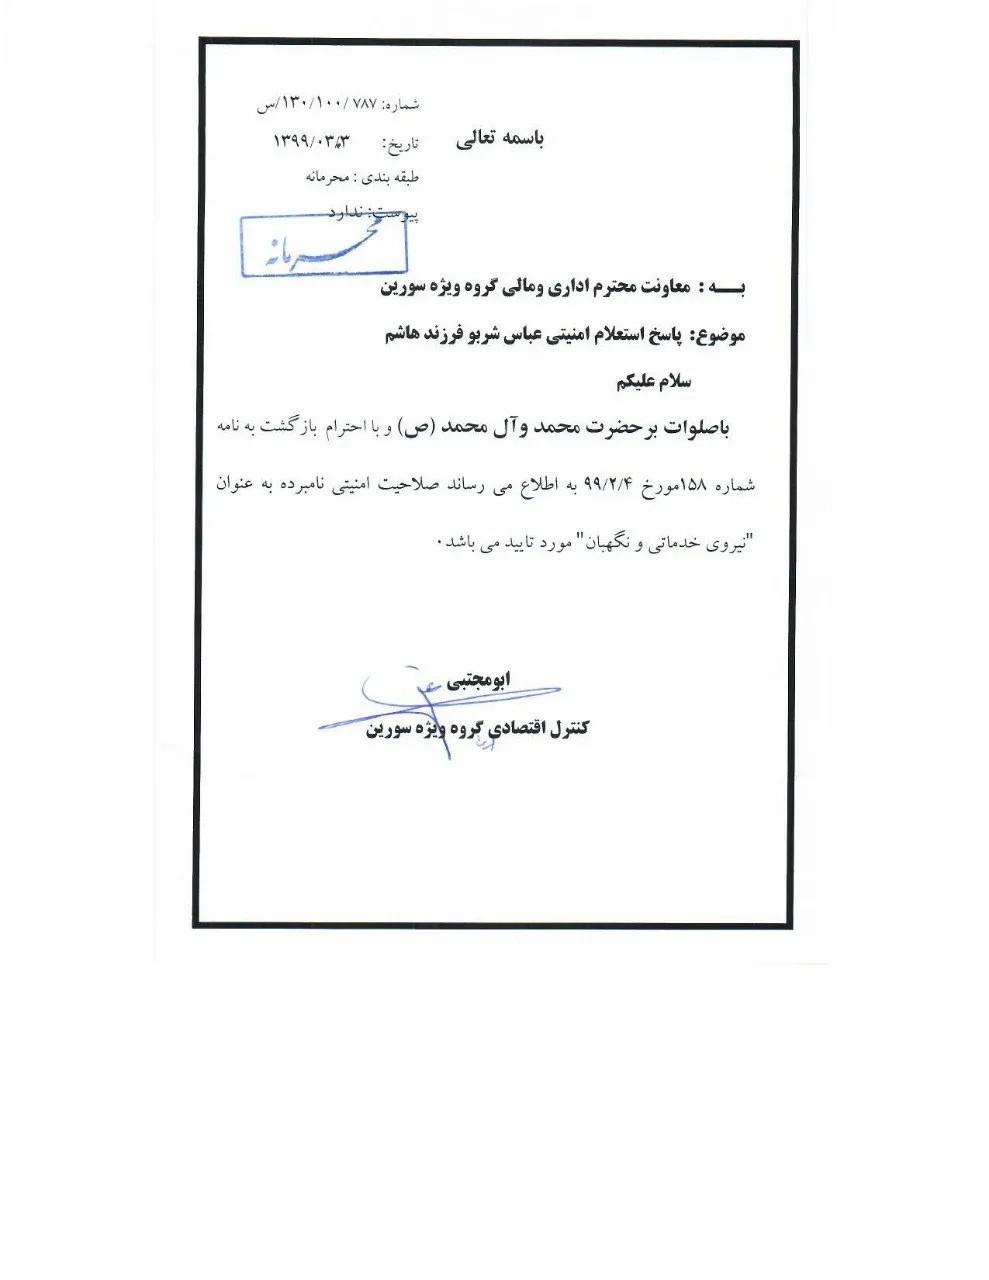 ifmat - Confidential documents from the Khatam al Anbiya Construction Company